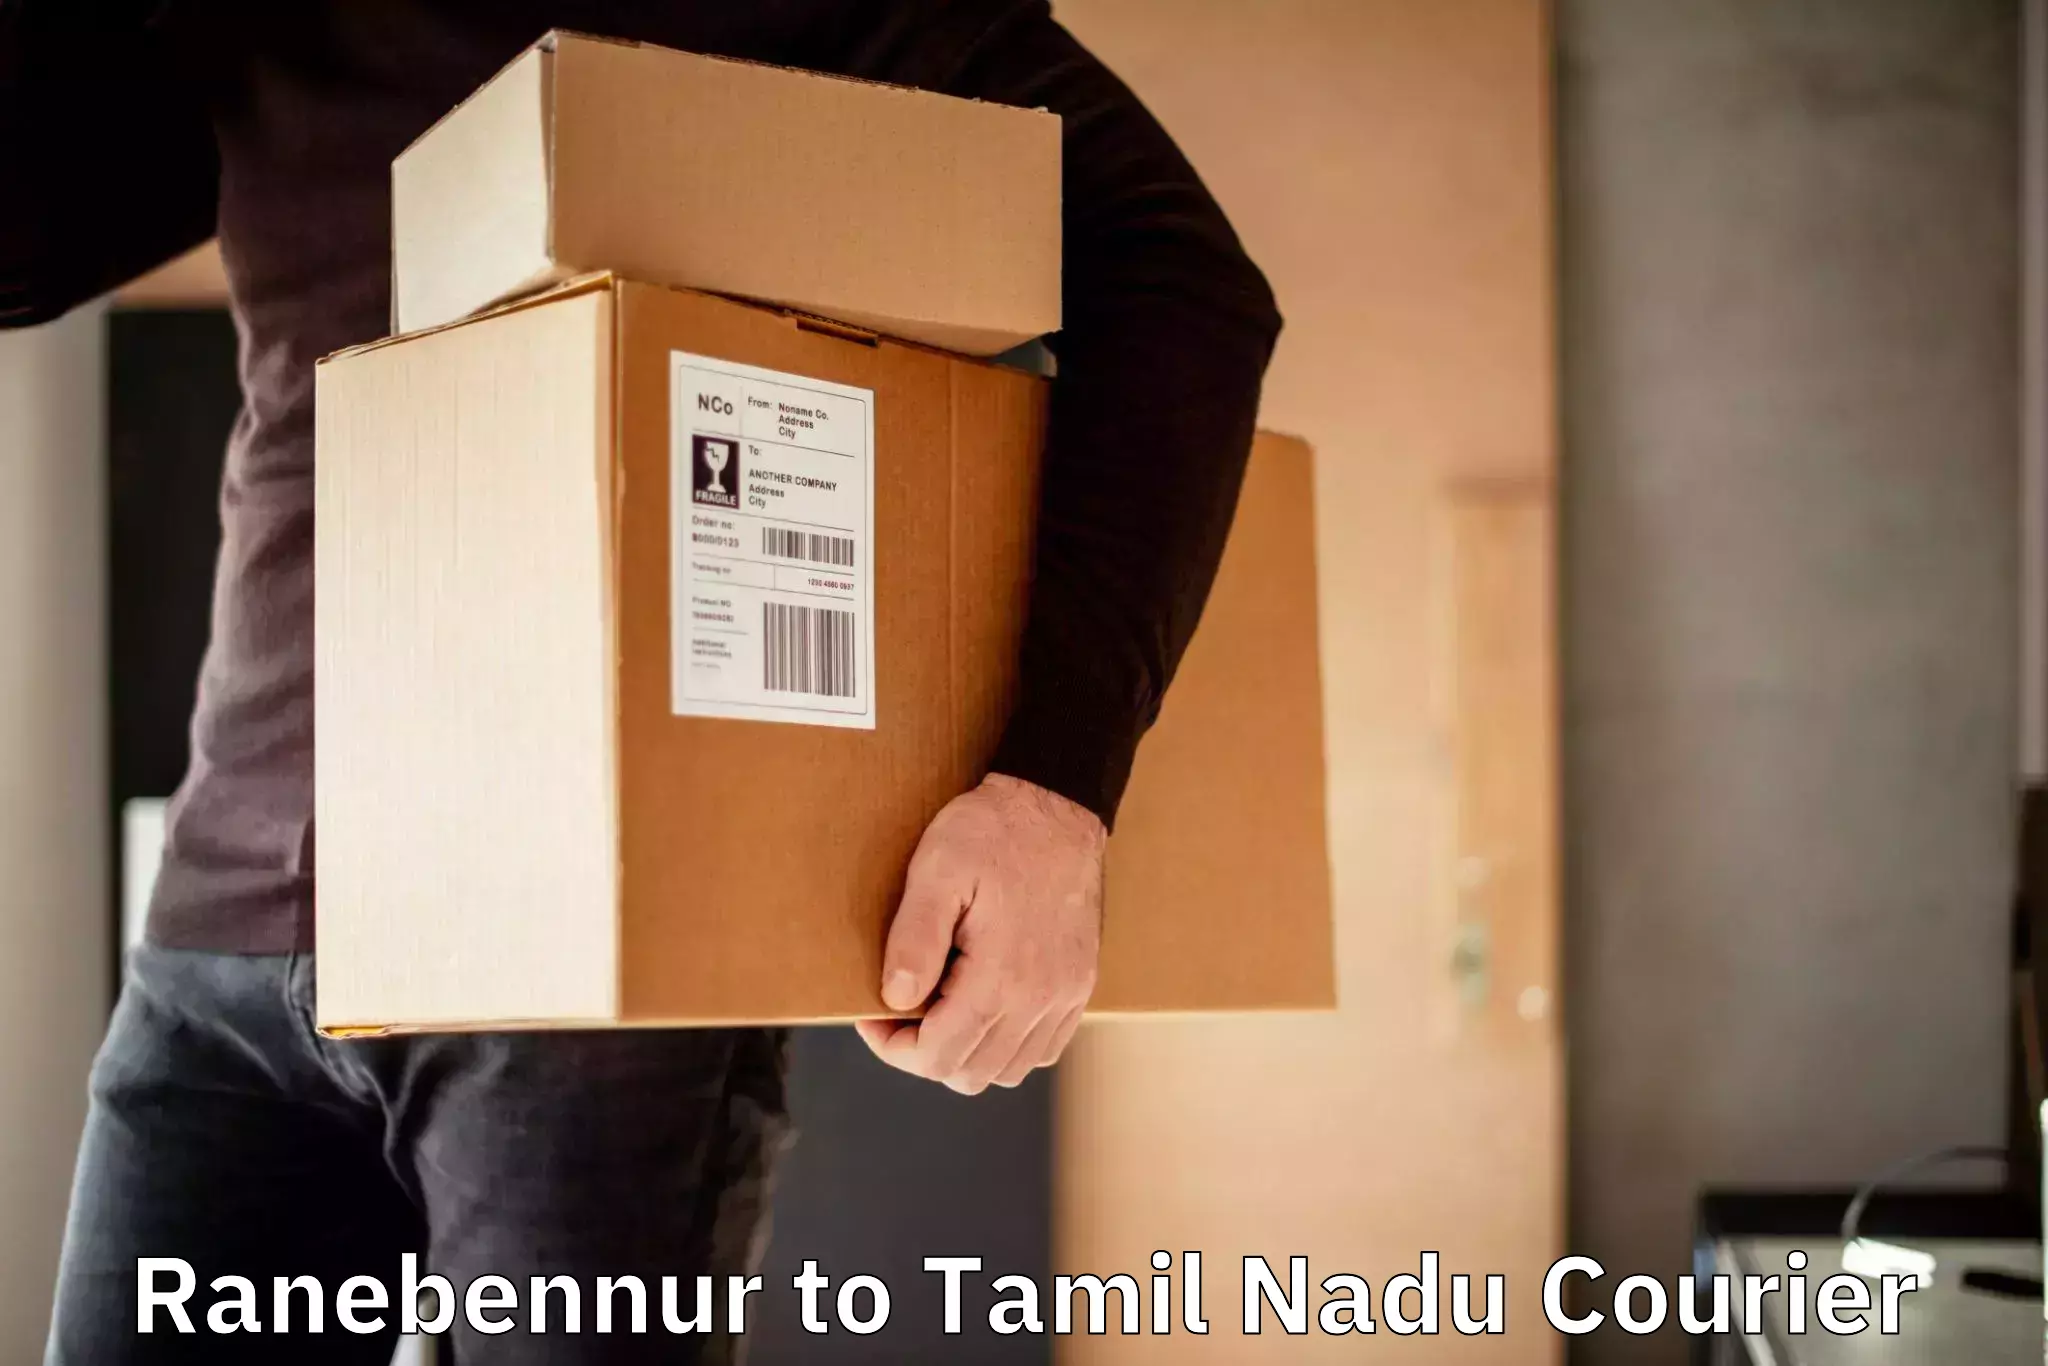 Fast-track shipping solutions Ranebennur to Tamil Nadu